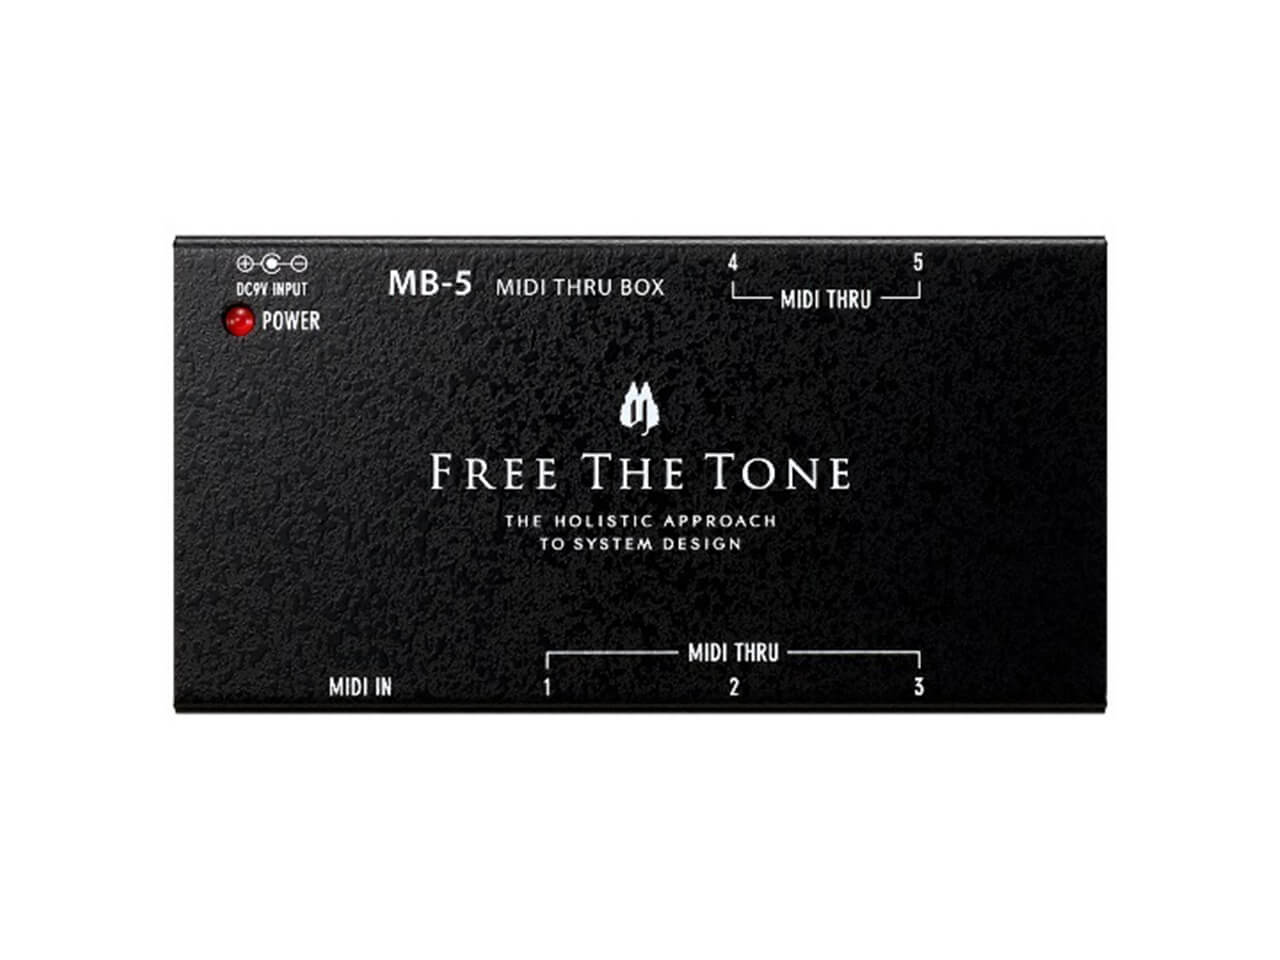 Free The Tone(フリーザトーン) MB-5 MIDI THRU BOX (ジャンクションボックス)